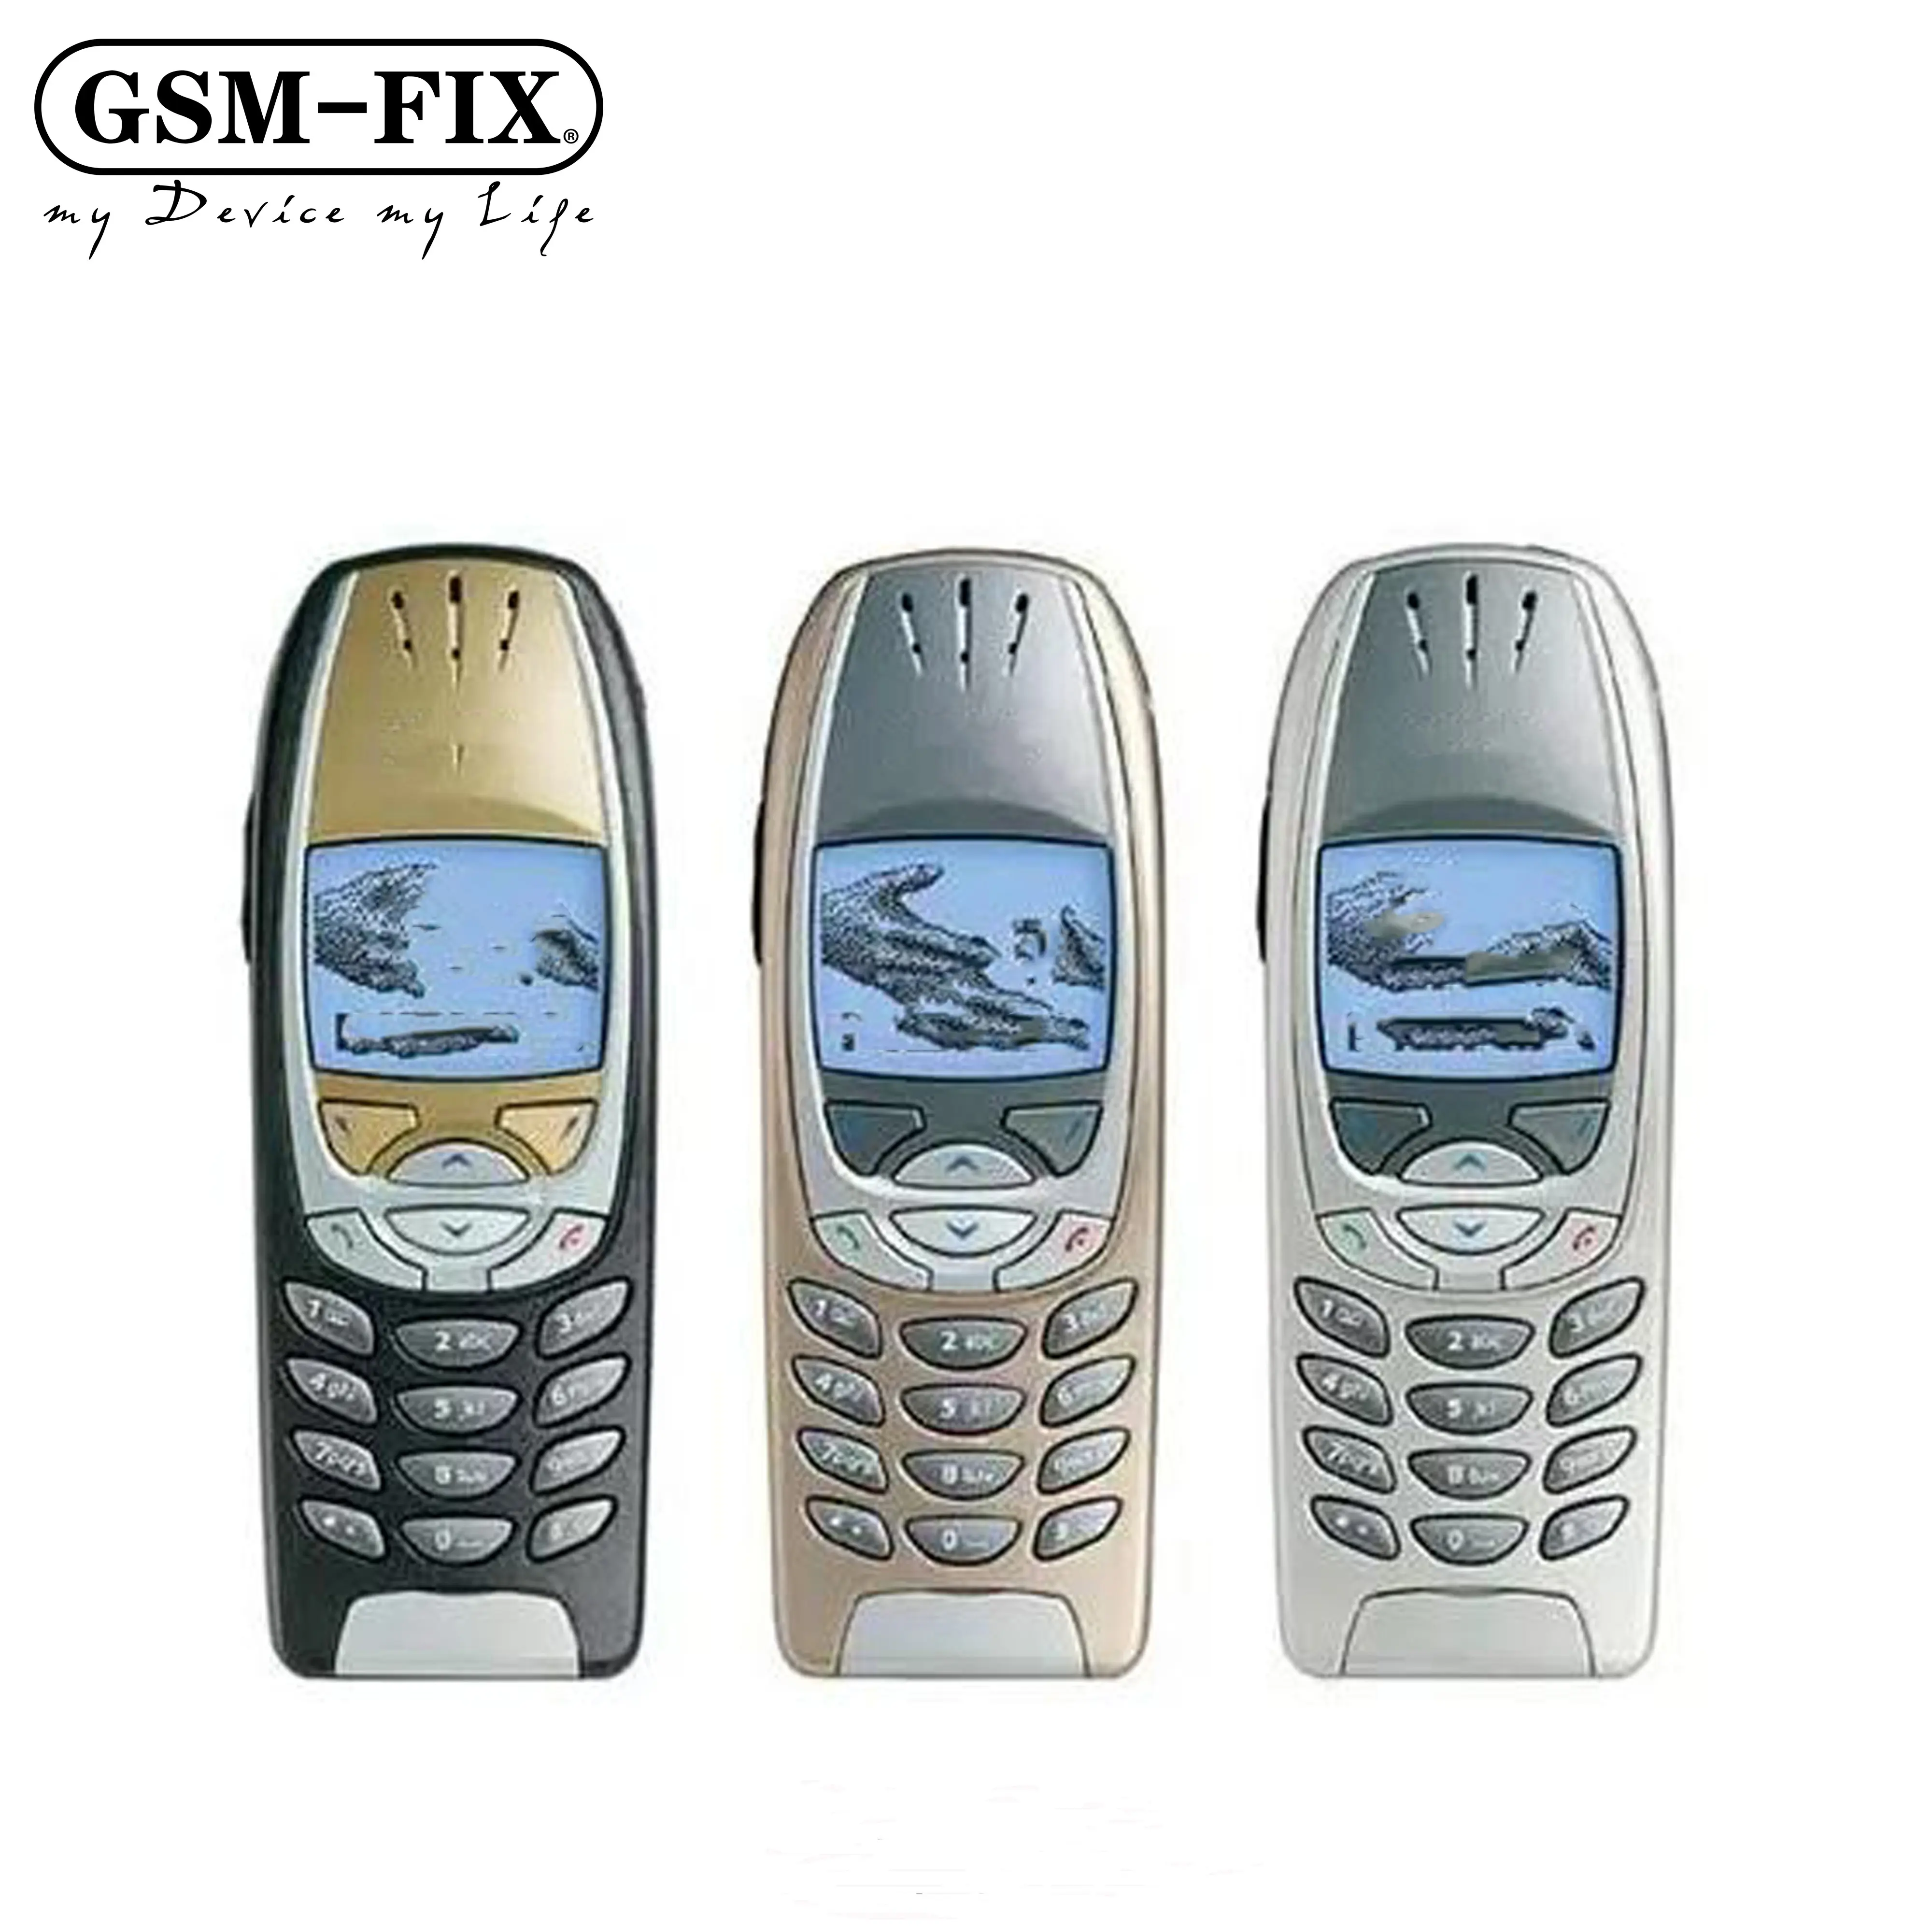 GSM-FIXノキア6310i用ロック解除オリジナル超格安GSMバーロック解除GSMバー携帯電話